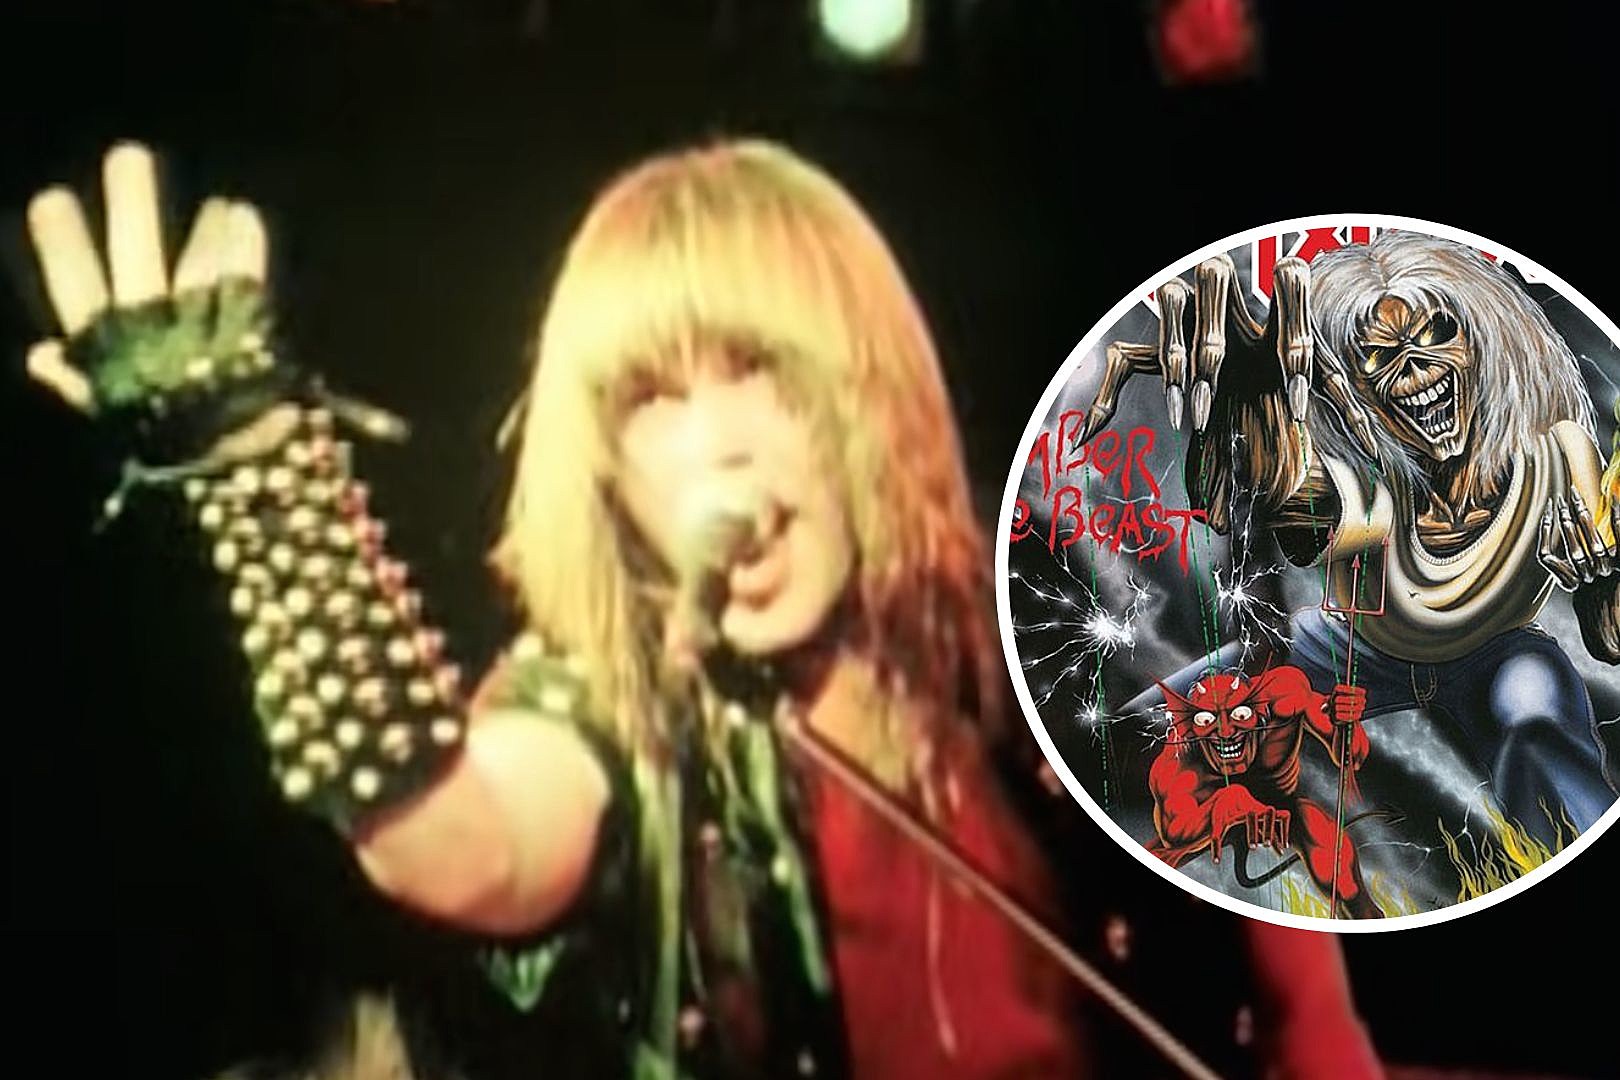 Iron Maiden - Best of the Beast Vol. 1 - Encyclopaedia Metallum: The Metal  Archives